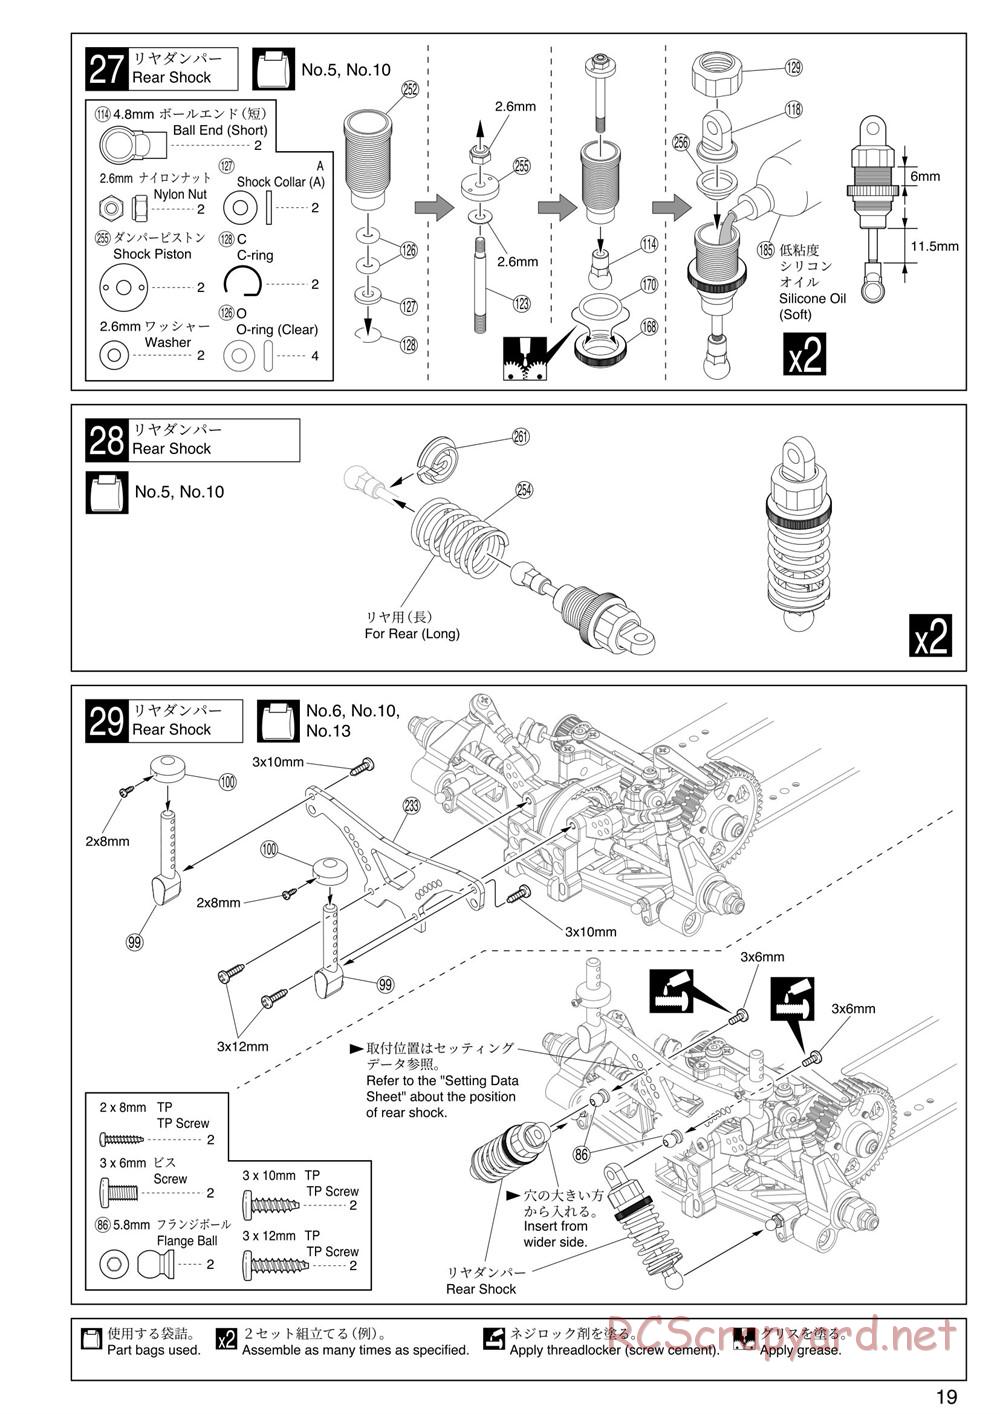 Kyosho - V-One RRR Evo - Manual - Page 19